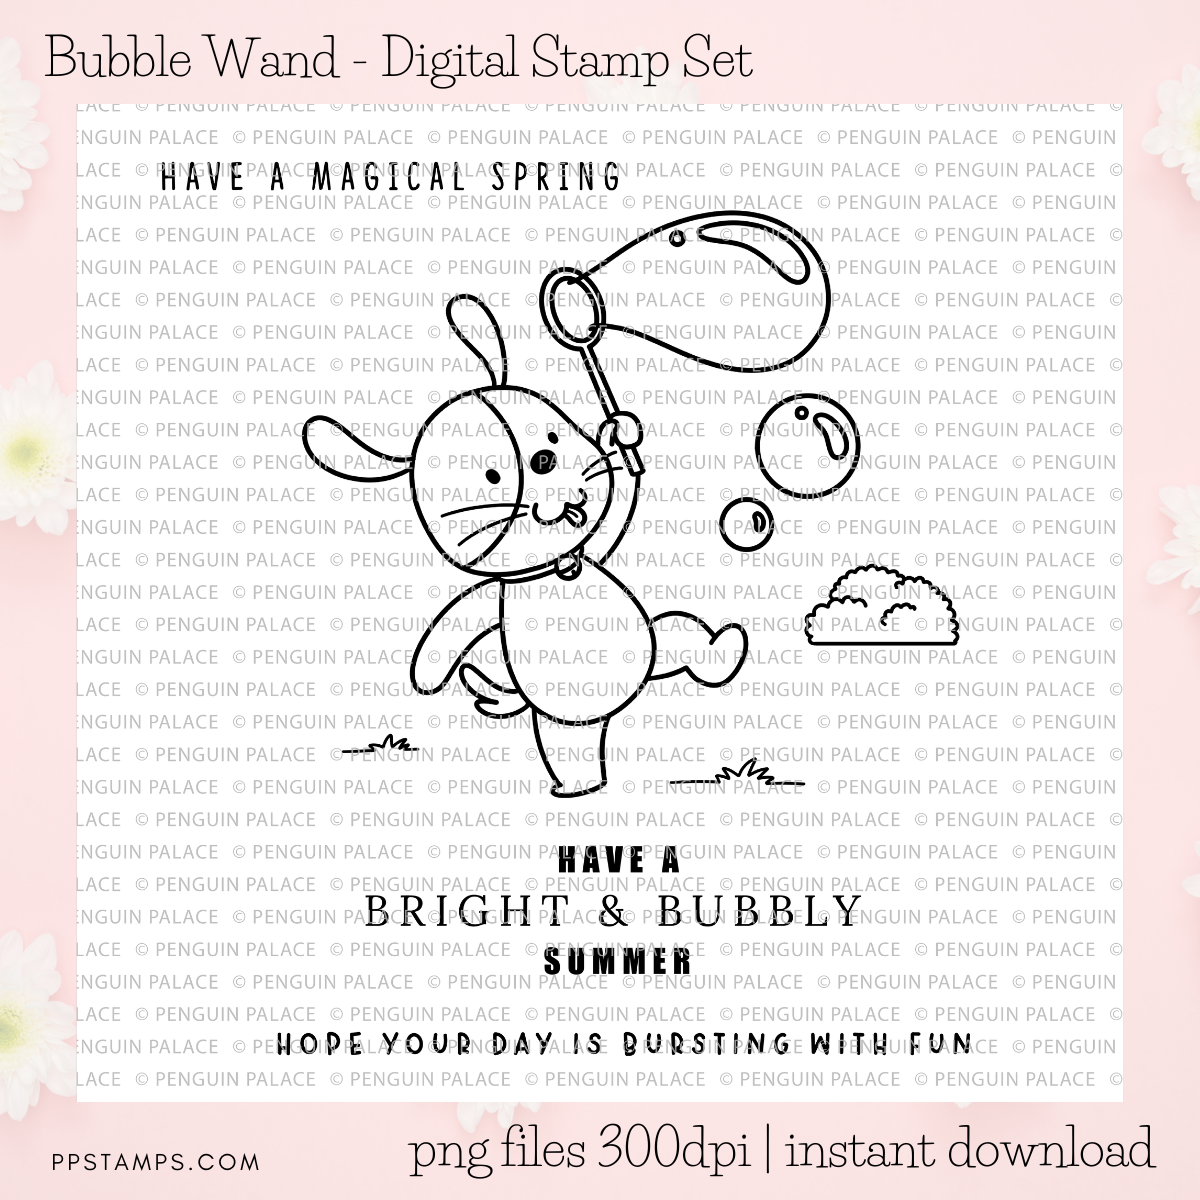 Bubble Wand - Digital Stamp